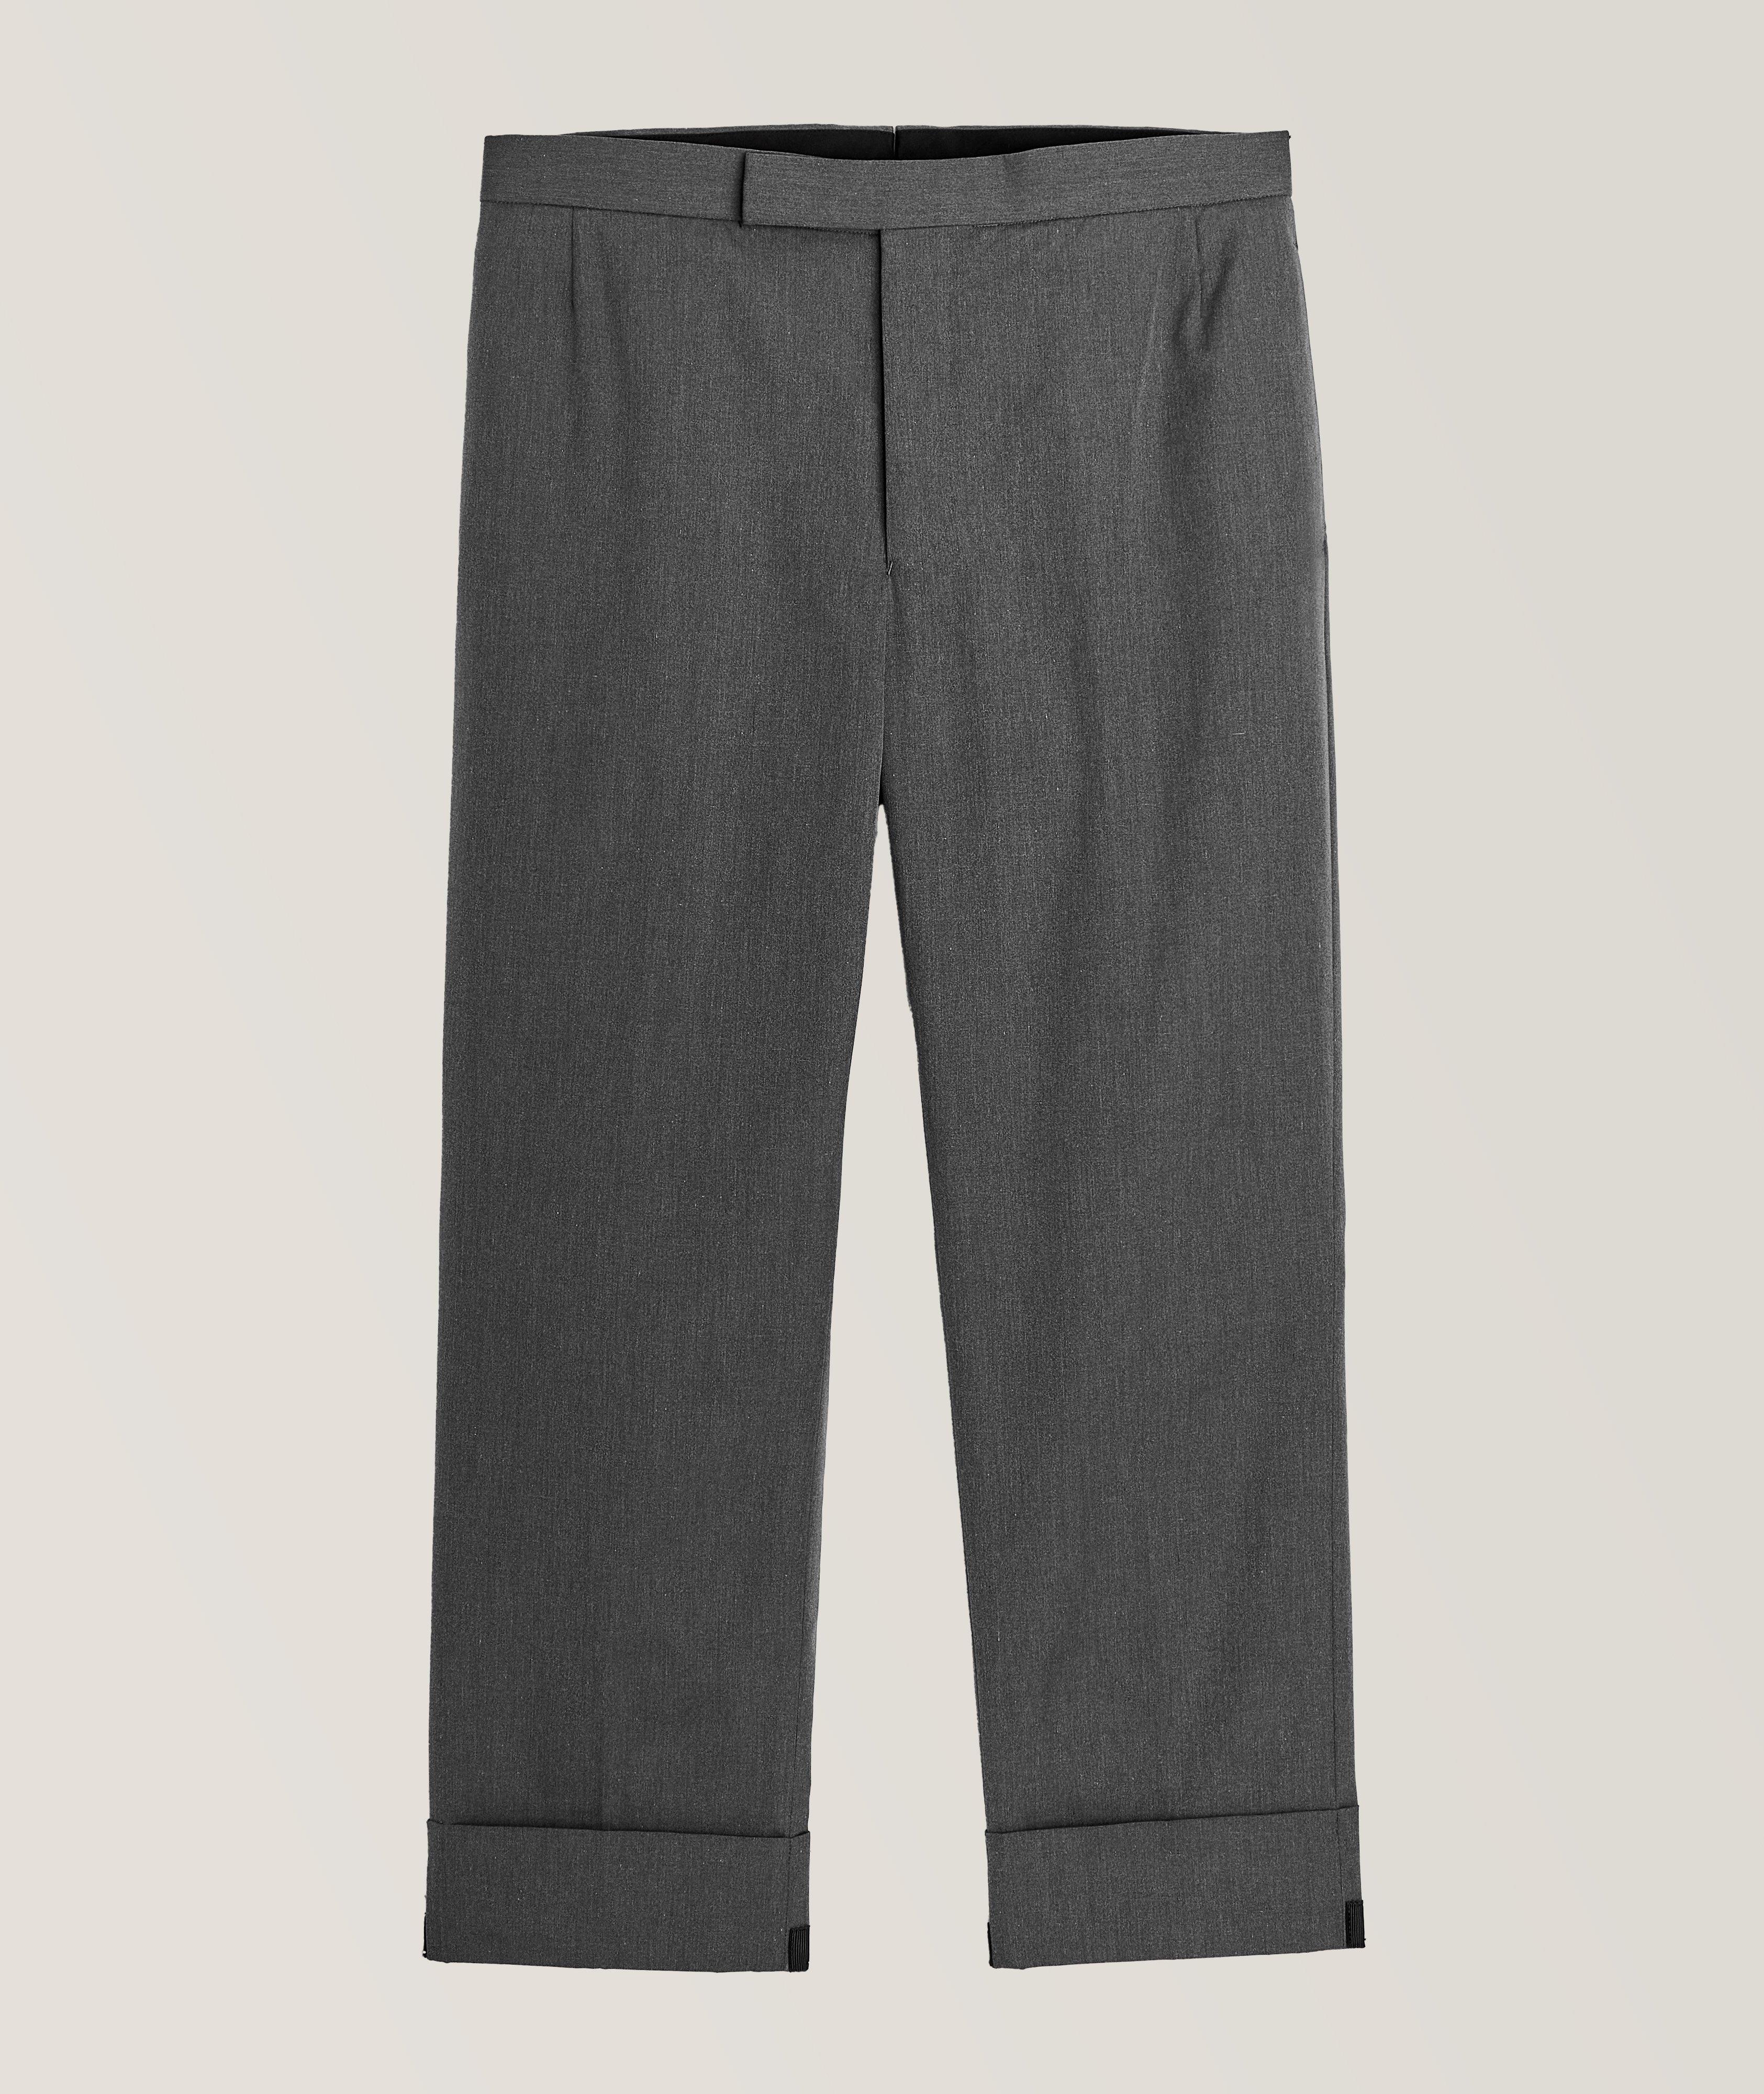 Cotton-Blend Pants with Adjustable Backstrap